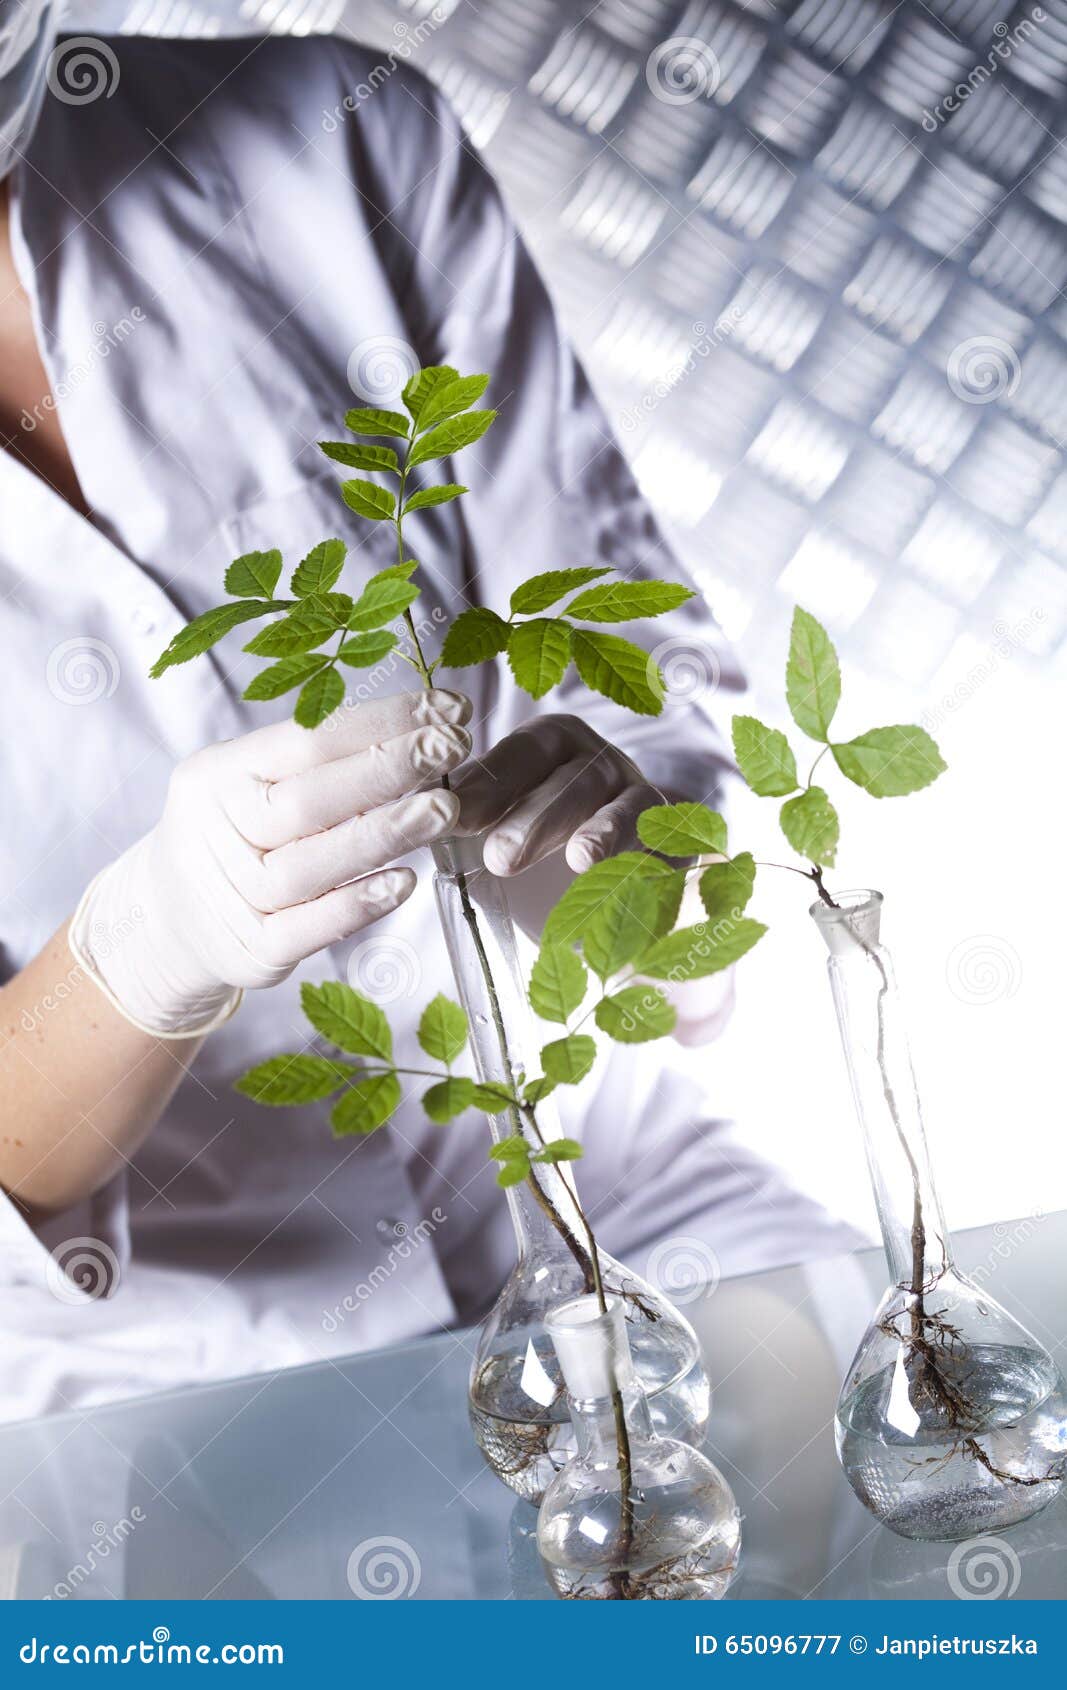 chemistry equipment, plants laboratory experimental